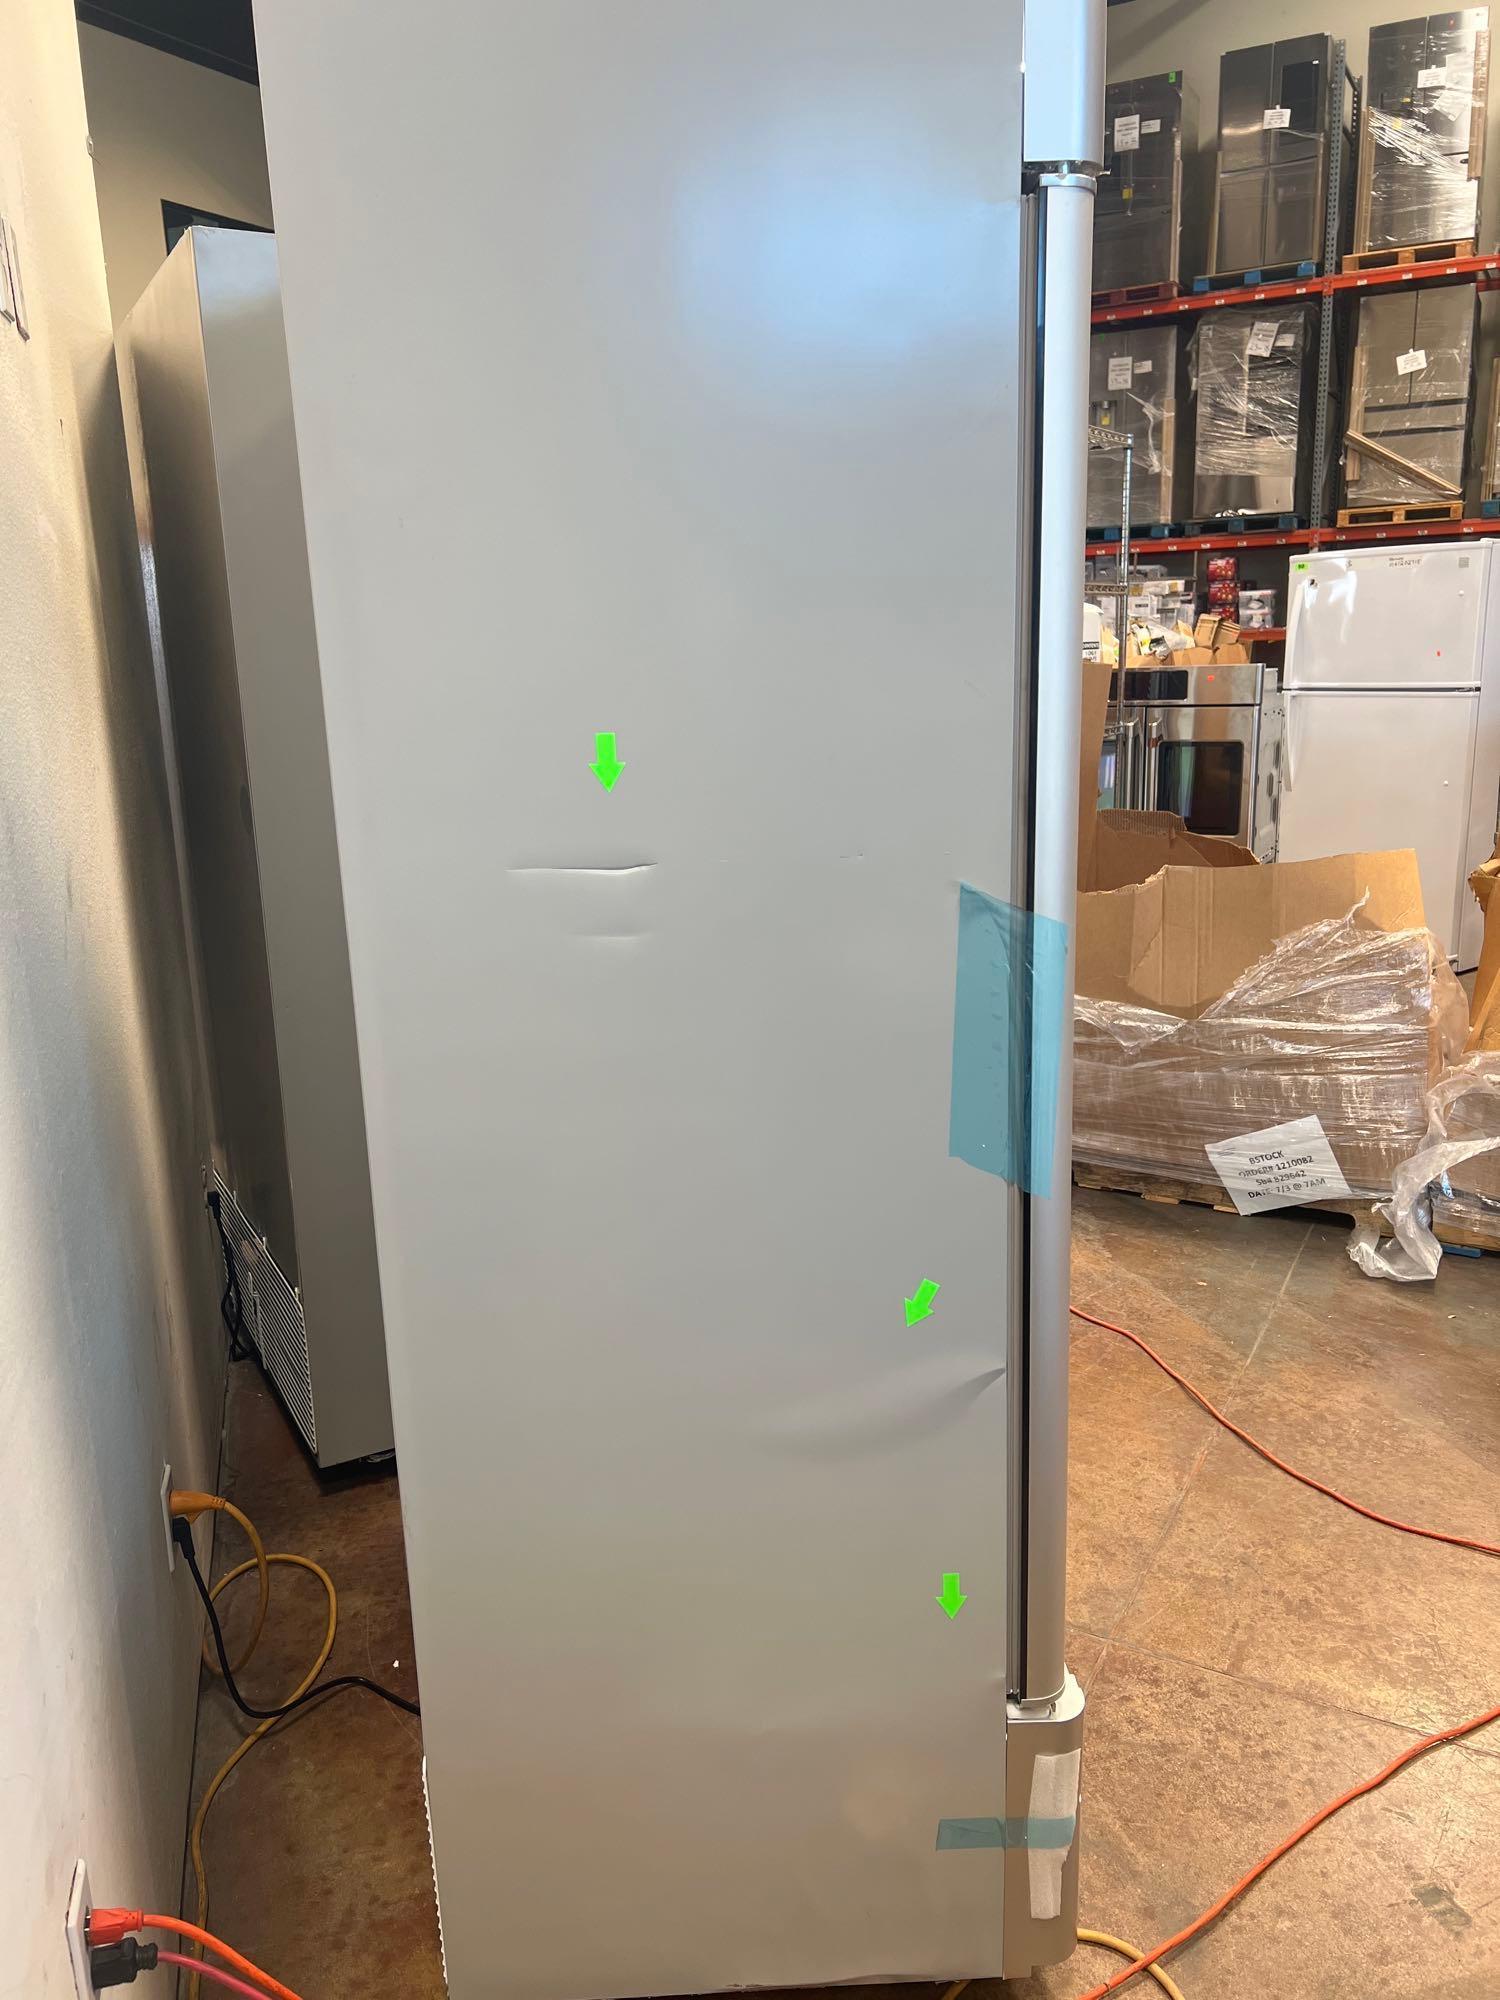 Premium Levella 29 cu.ft Commercial Double Door Display Refrigerator*GETS COLD*